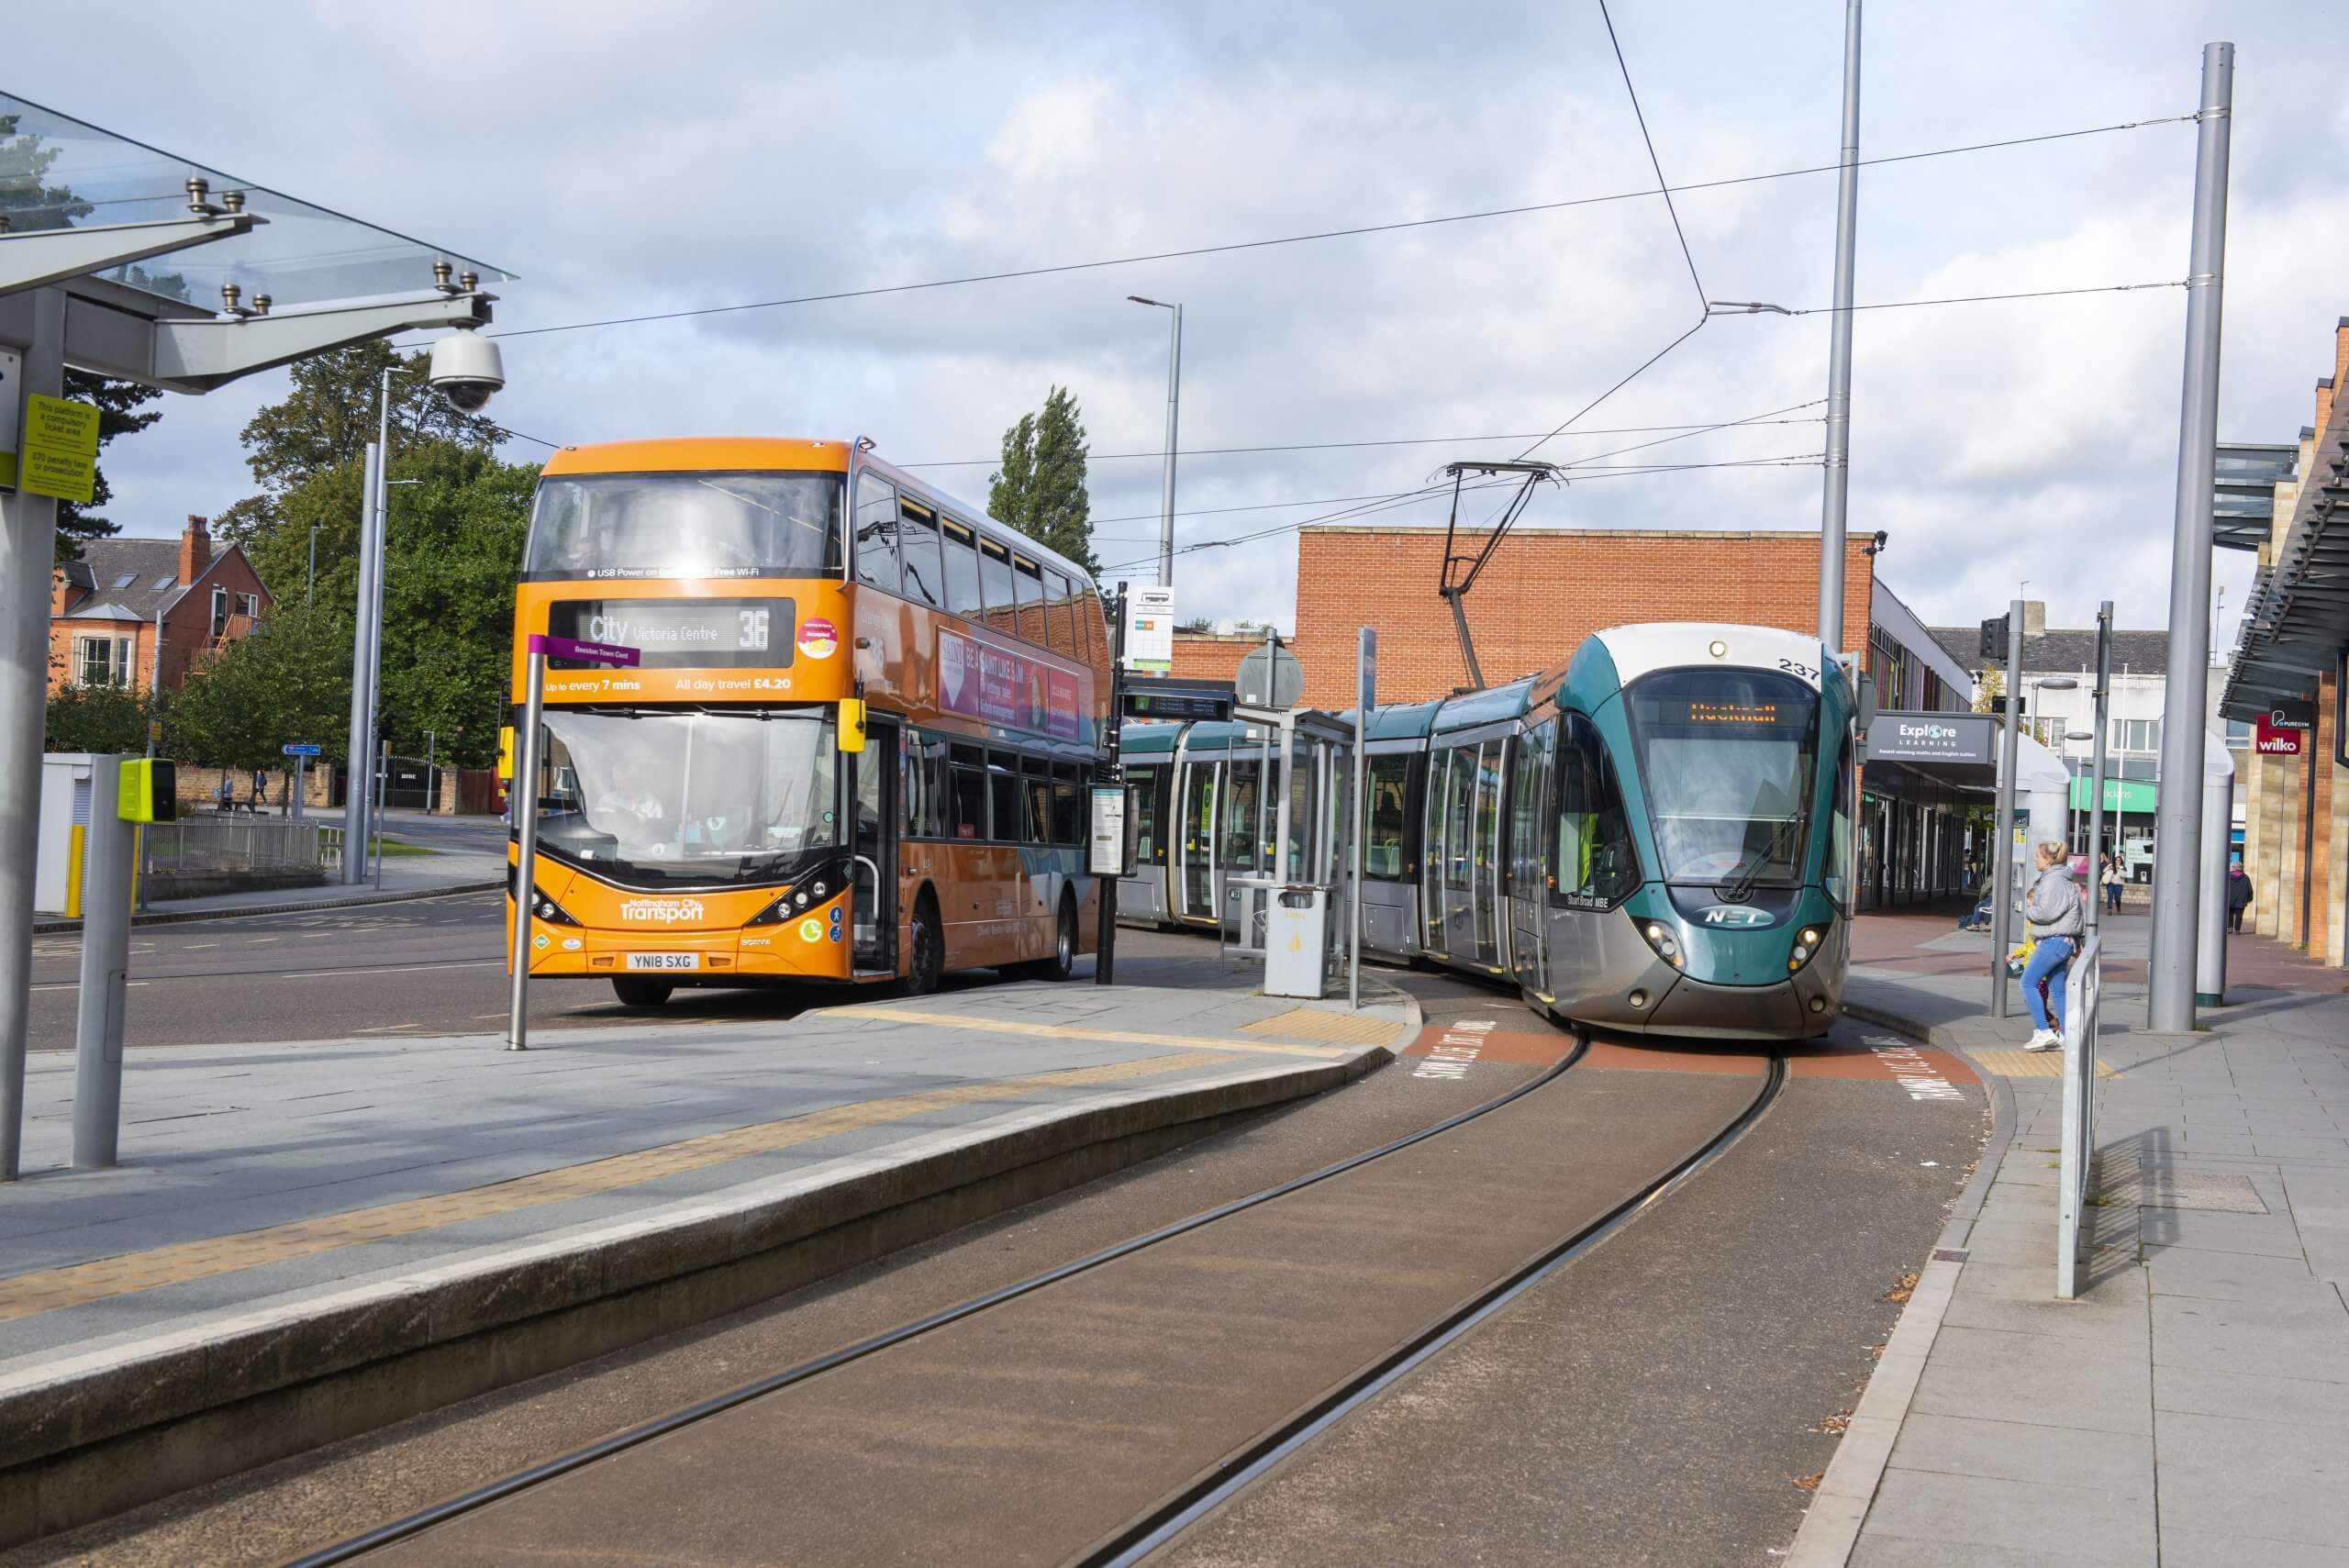 A bus and tram at Beeston Interchange